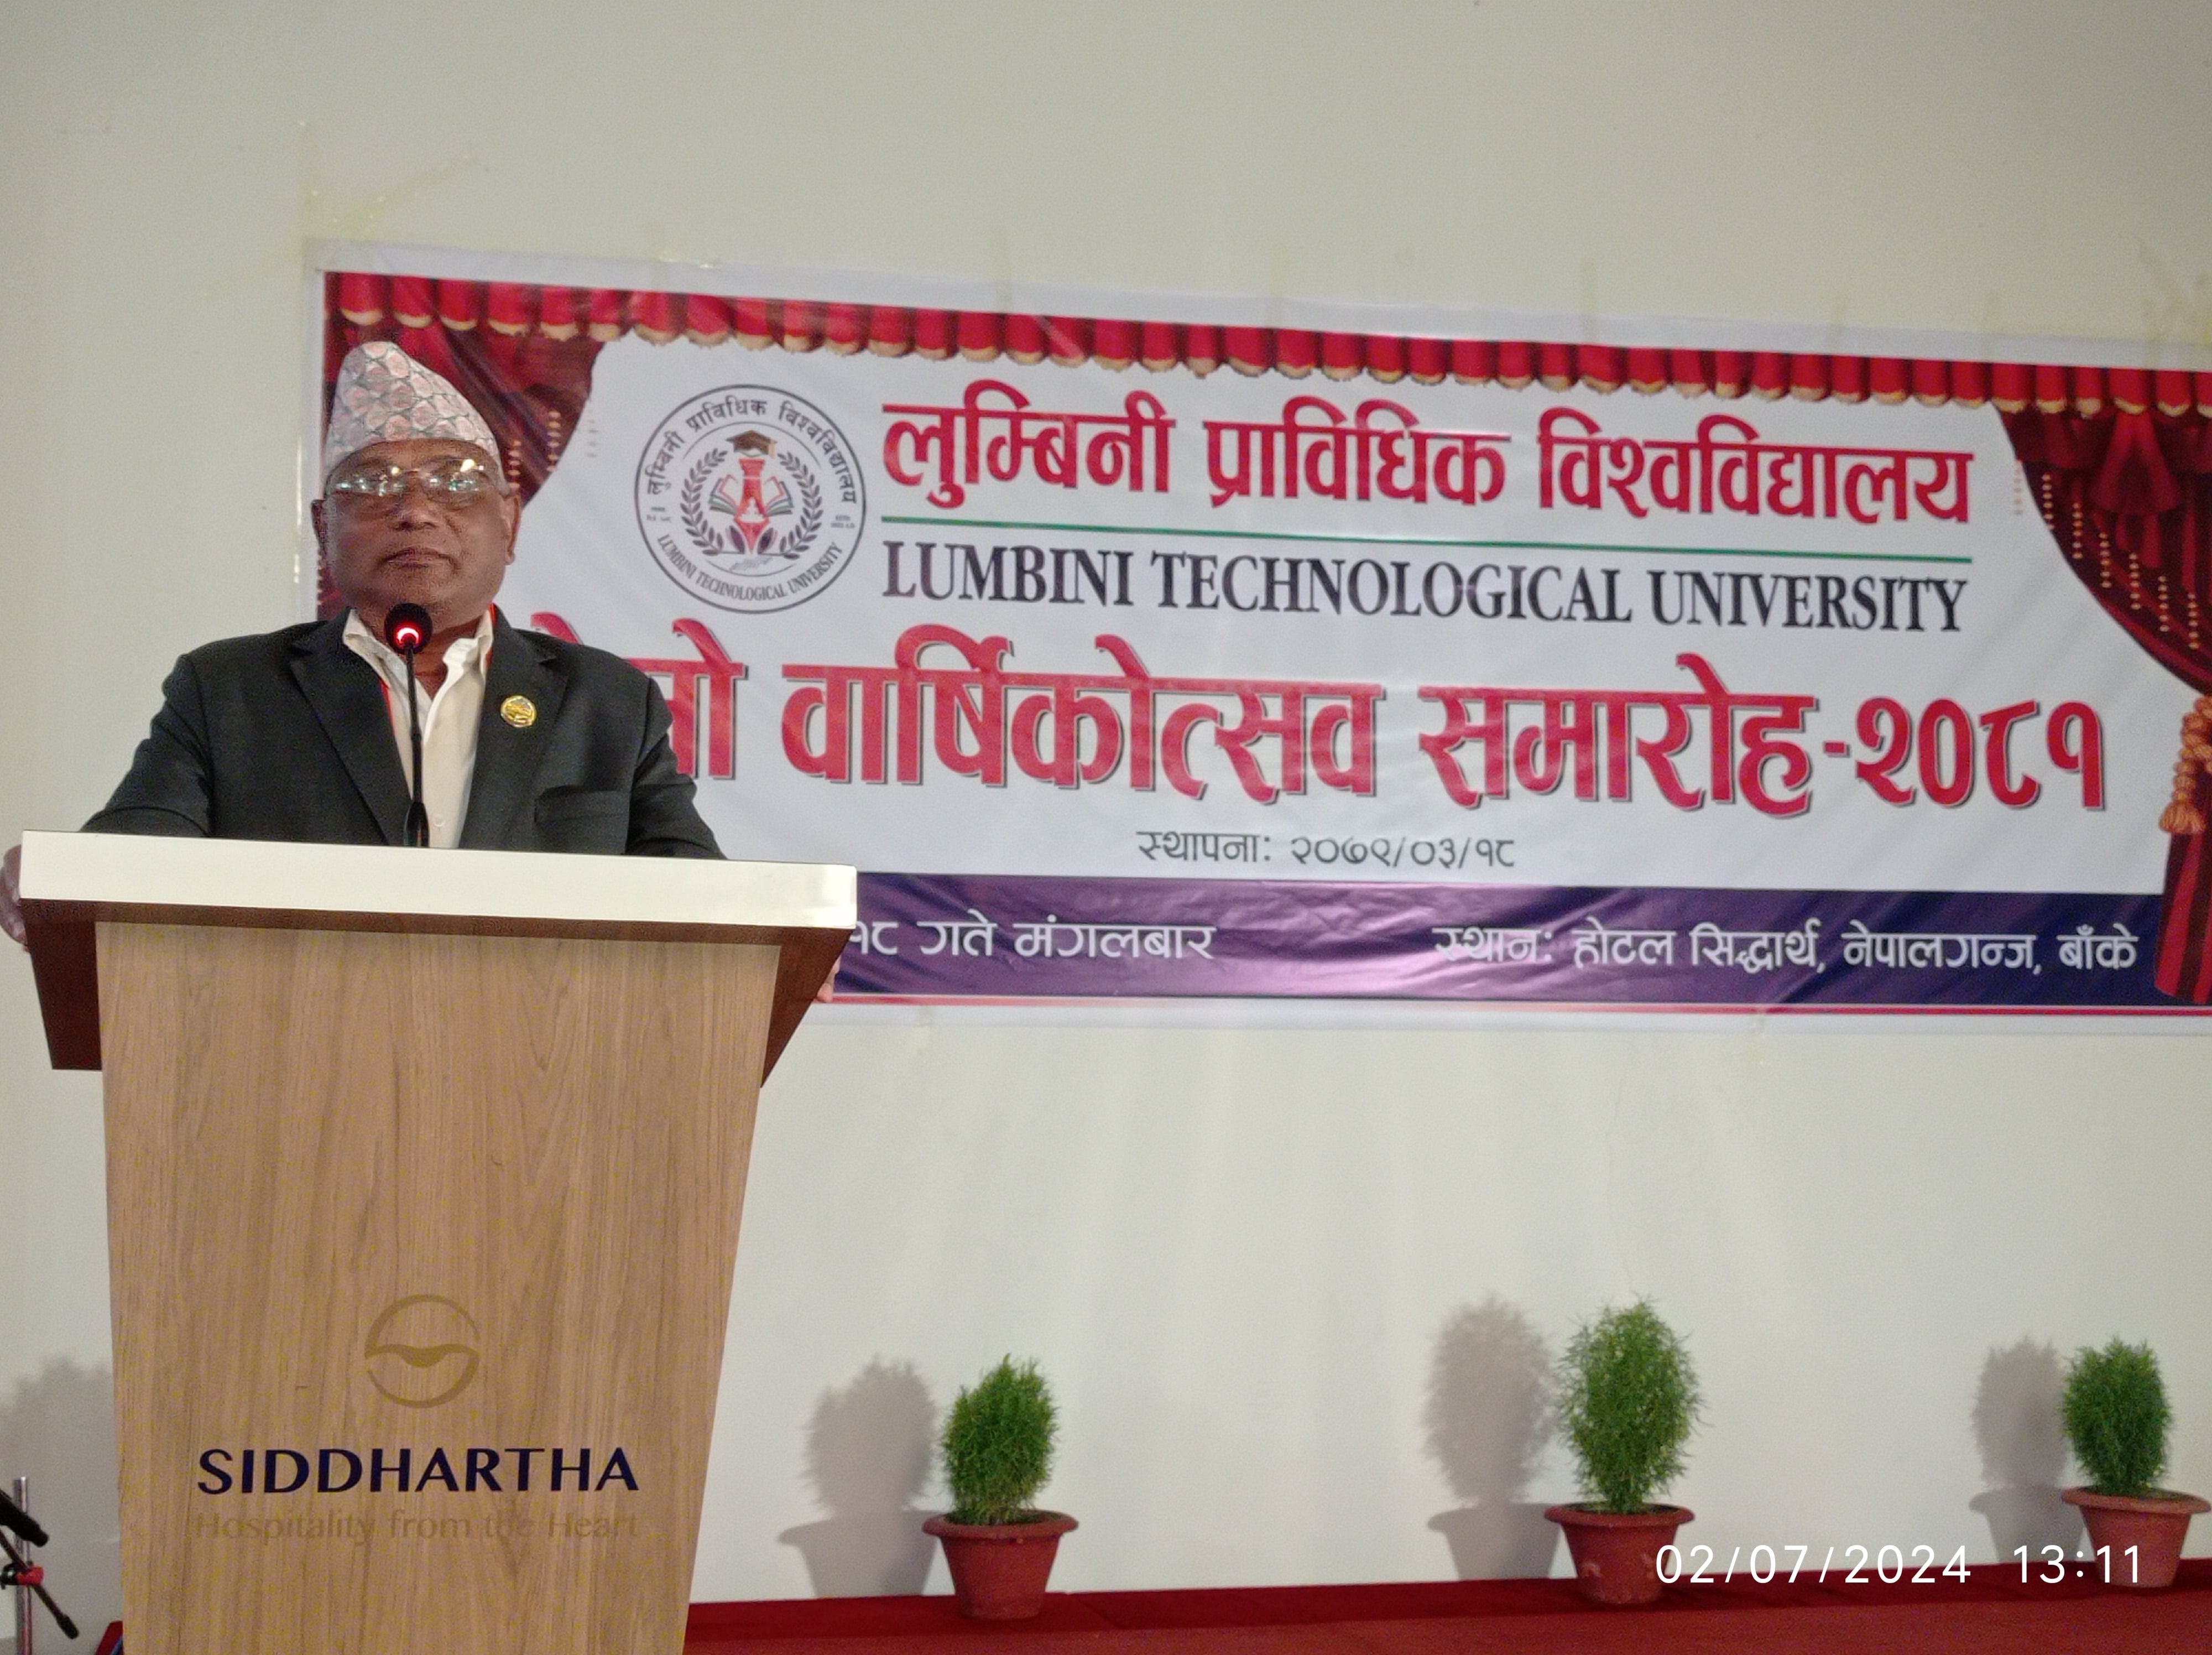 लुम्बिनी प्राविधिक विश्वविद्यालयलाई उत्कृष्ट शैक्षिक गन्तव्य बनाउँछौं:मुख्यमन्त्री महरा